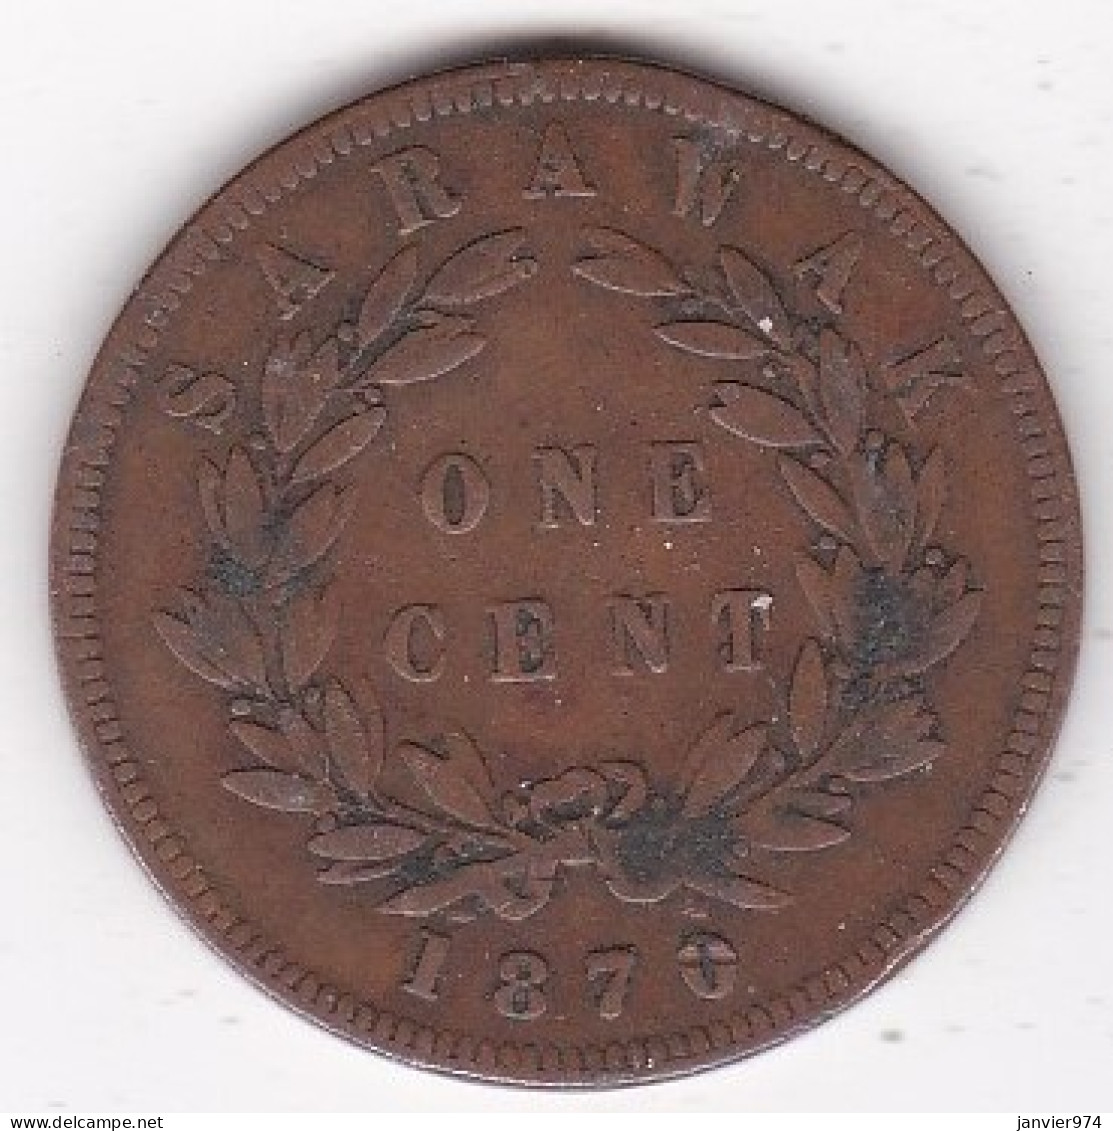 Sarawak . One Cent 1870 . C. BROOKE RAJAH. KM# 6 - Maleisië